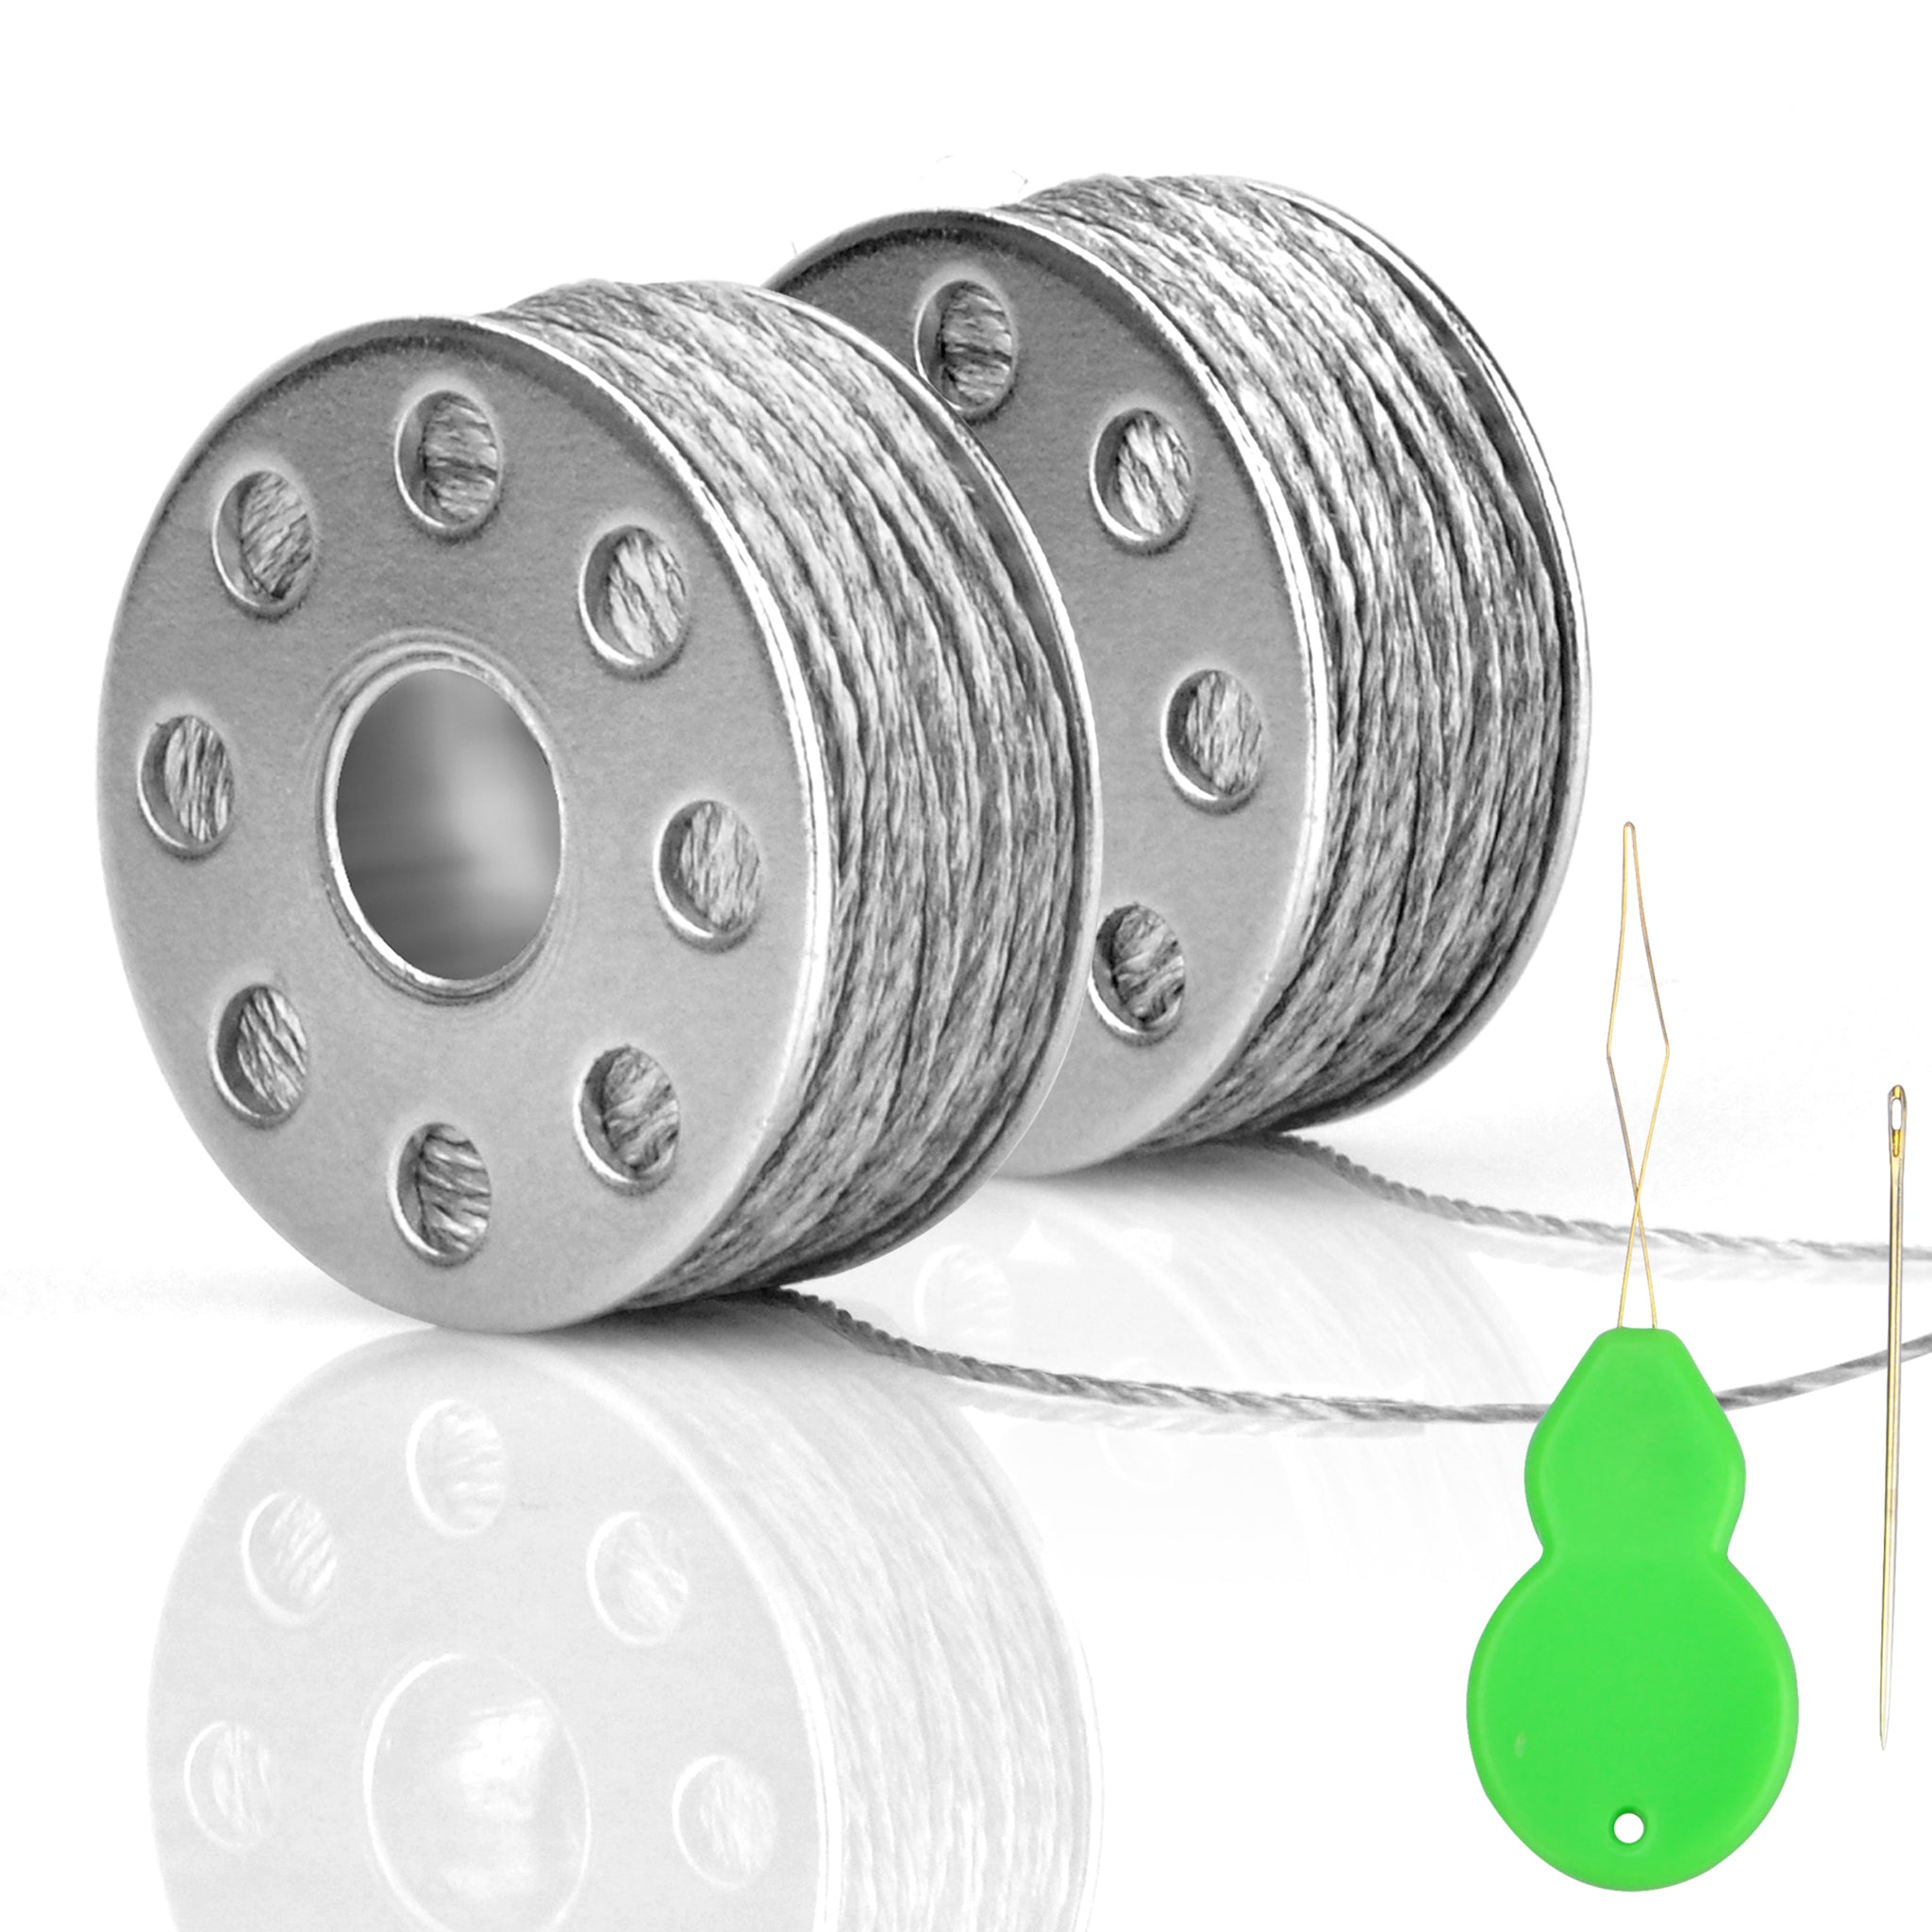 Leitfähiger Faden, 2 Spulen, 65 Fuß/20 m, 60–80 Ω/m, glatt, nähbar, für Arduino Lilypad mit Nadeleinfädler